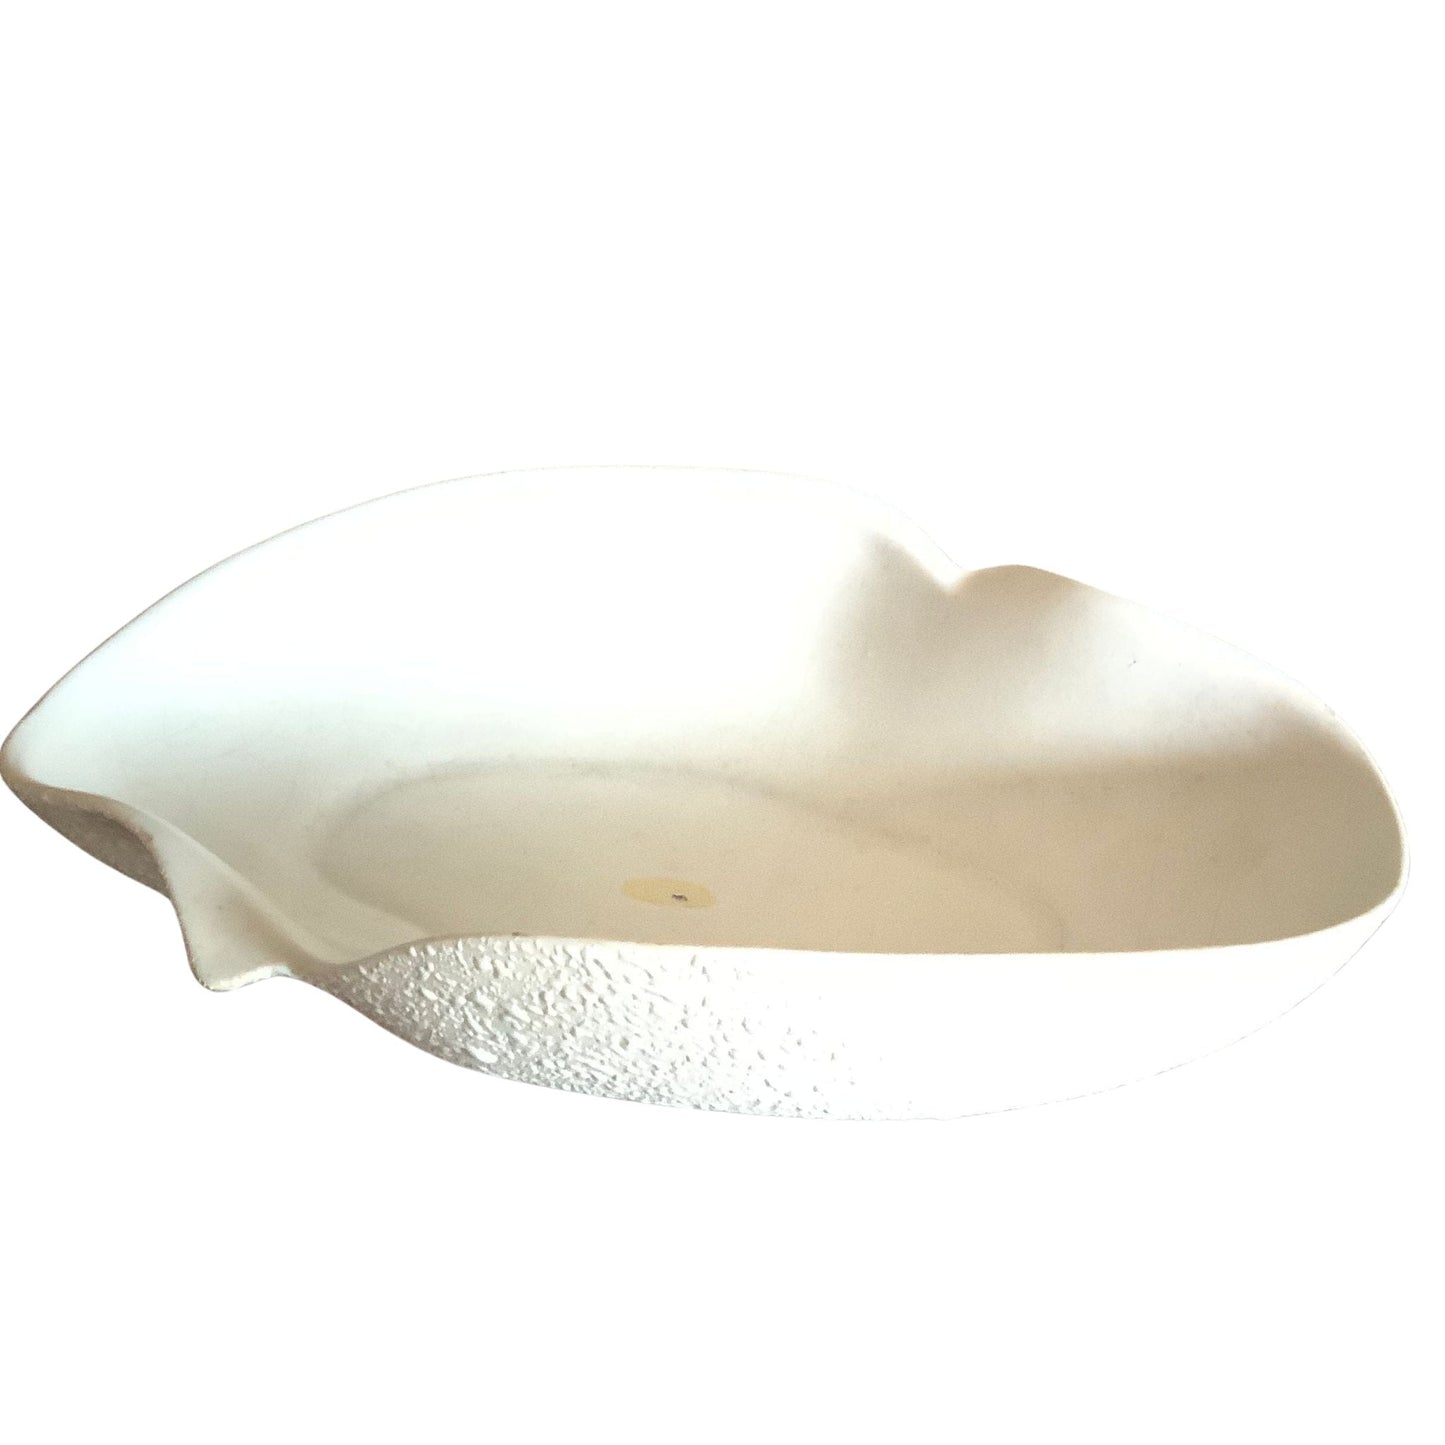 Mid Century Modern Bowl White / Ceramic / Mid Century Modern